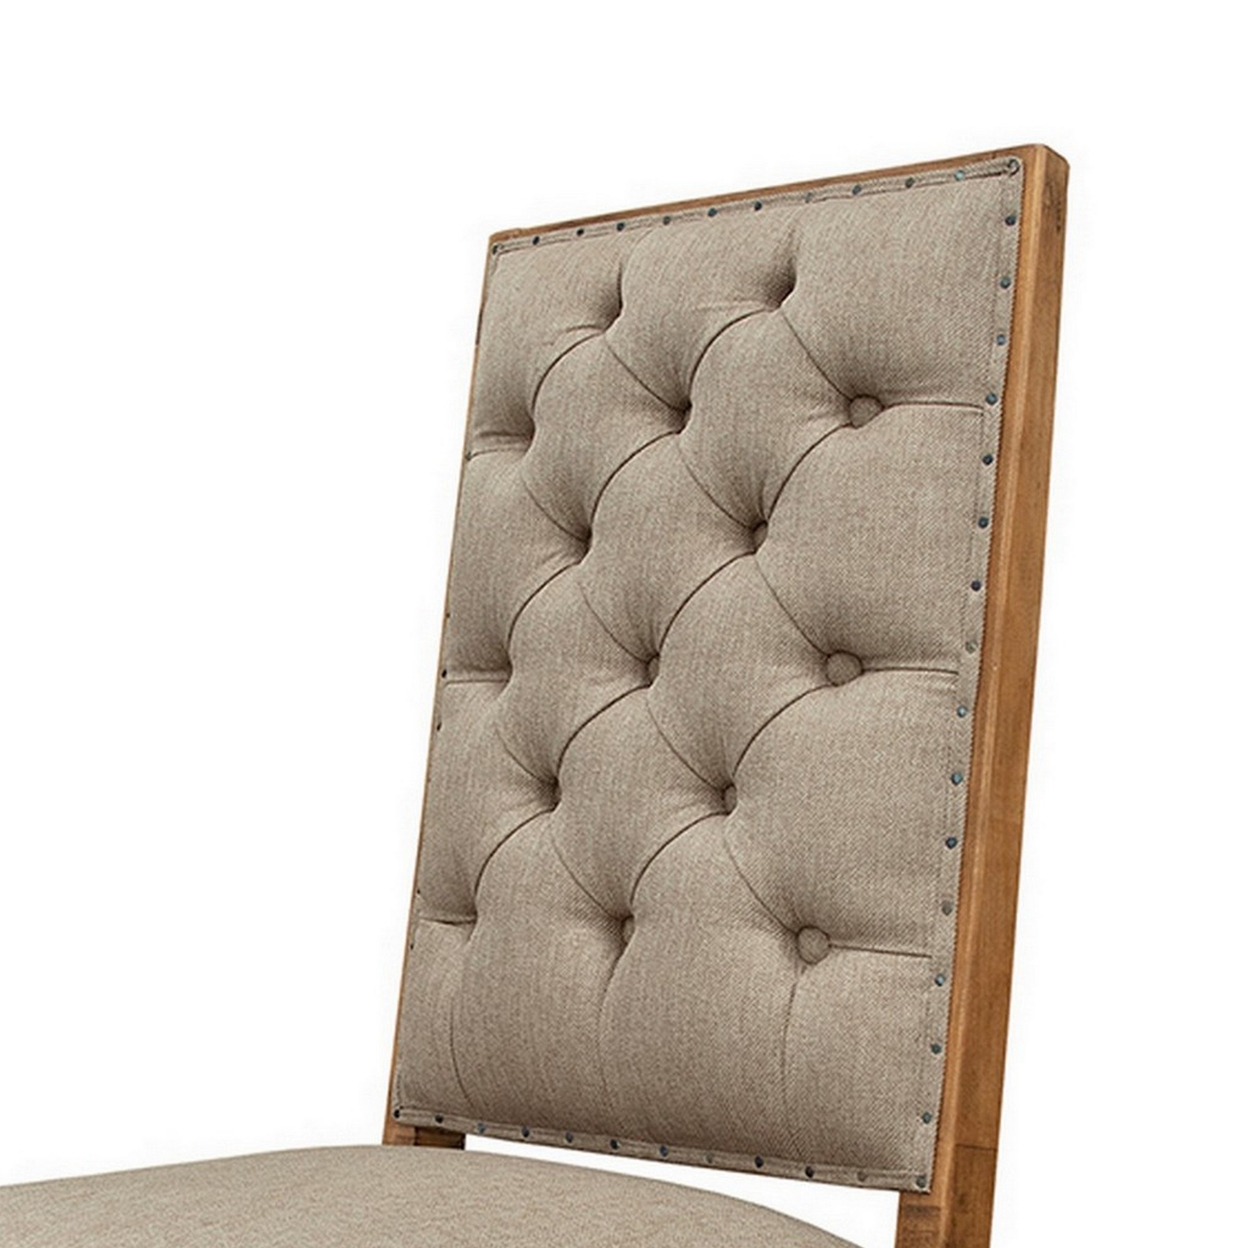 Ebb 24 Inch Upholstered Counter Stool, Tufted Back, Pine Wood, Light Brown- Saltoro Sherpi